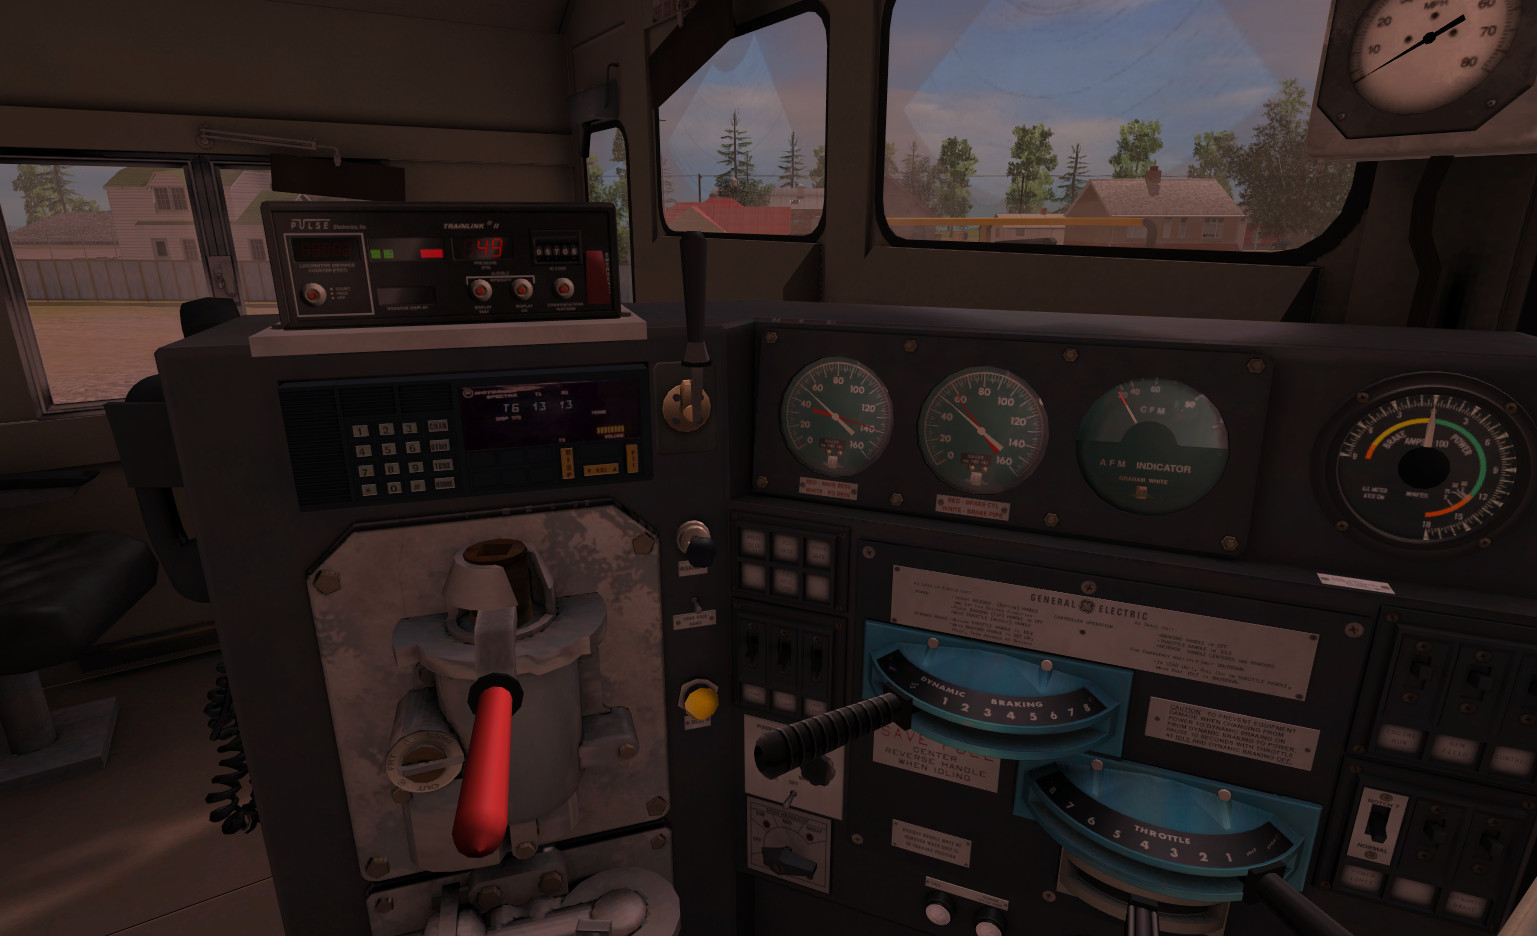 Trainz 2019 DLC: Union Pacific GE C40-8 screenshot